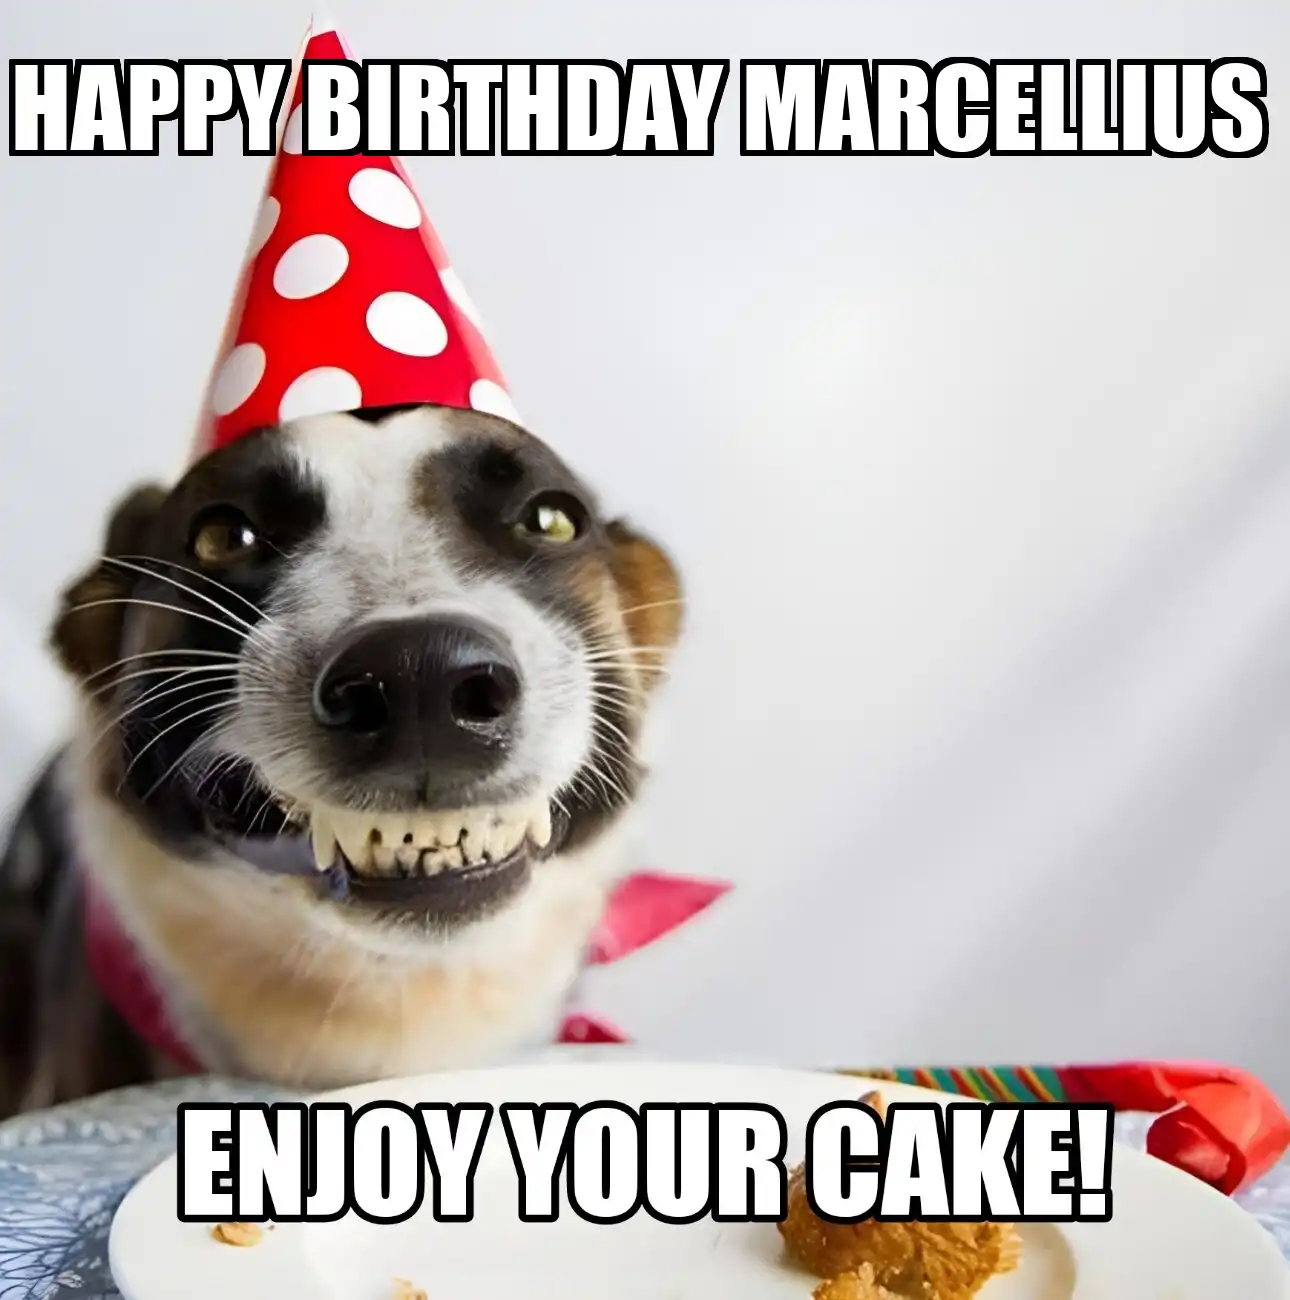 Happy Birthday Marcellius Enjoy Your Cake Dog Meme